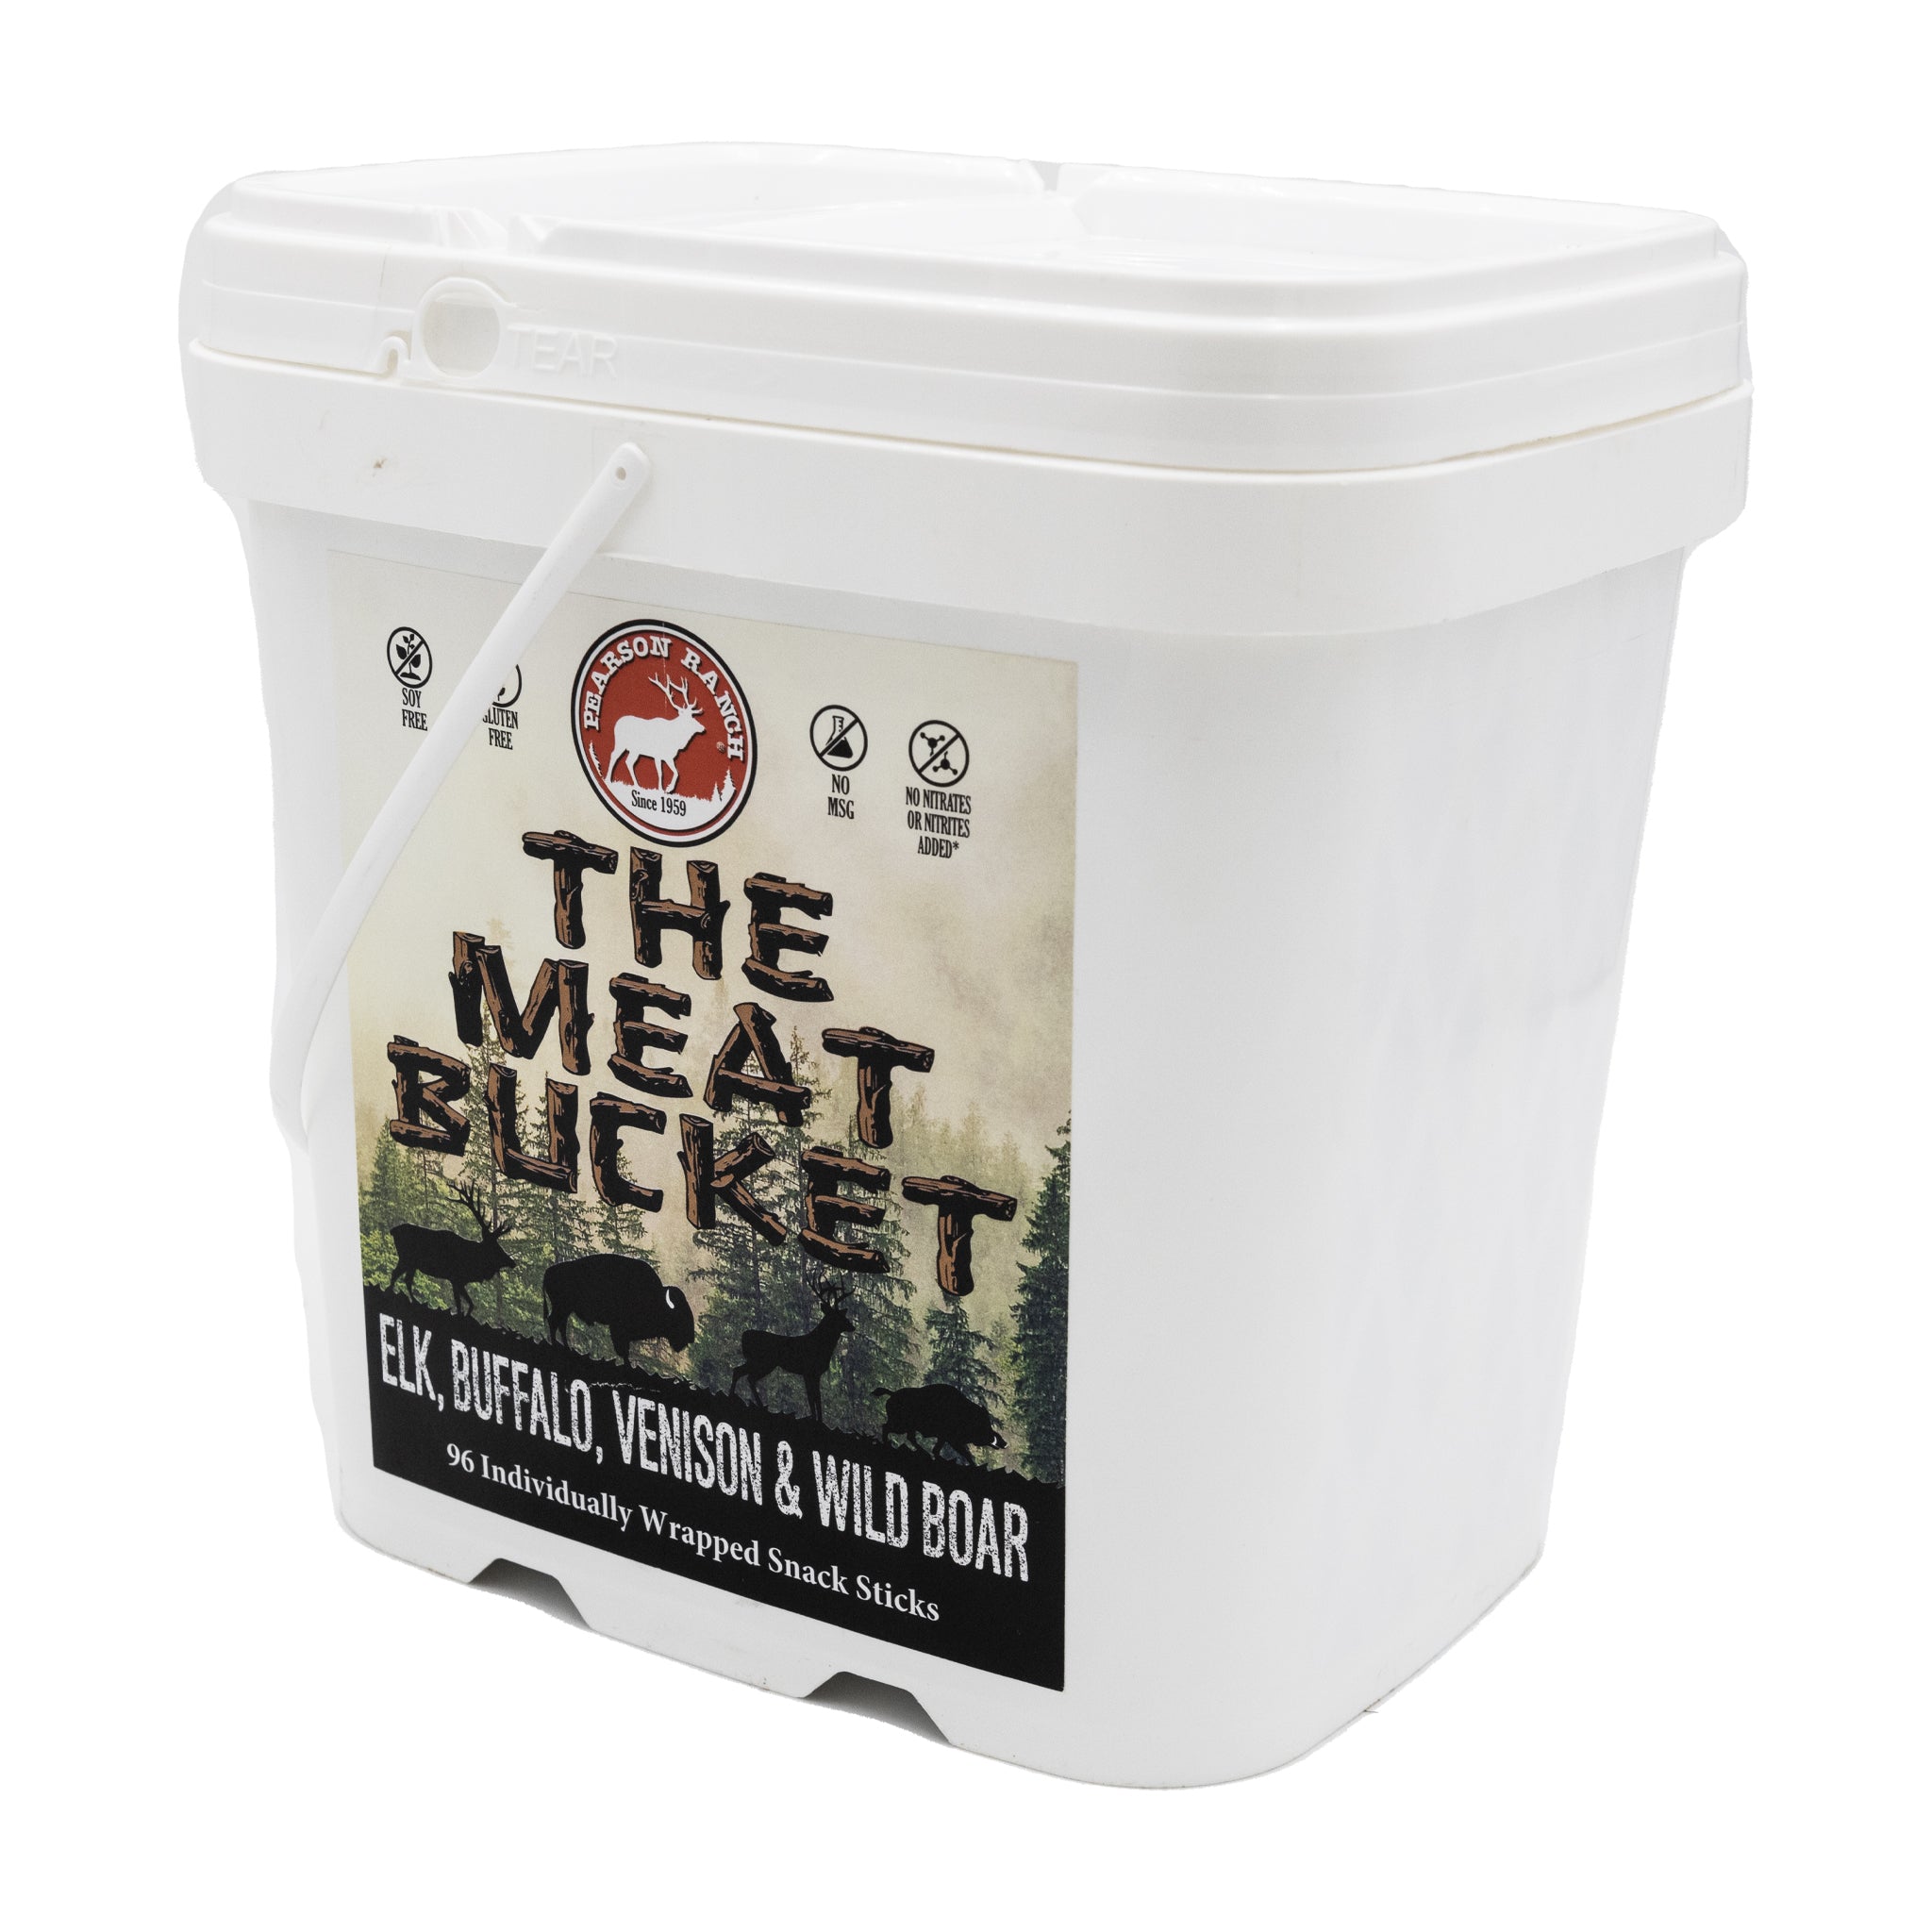 The Meat Bucket